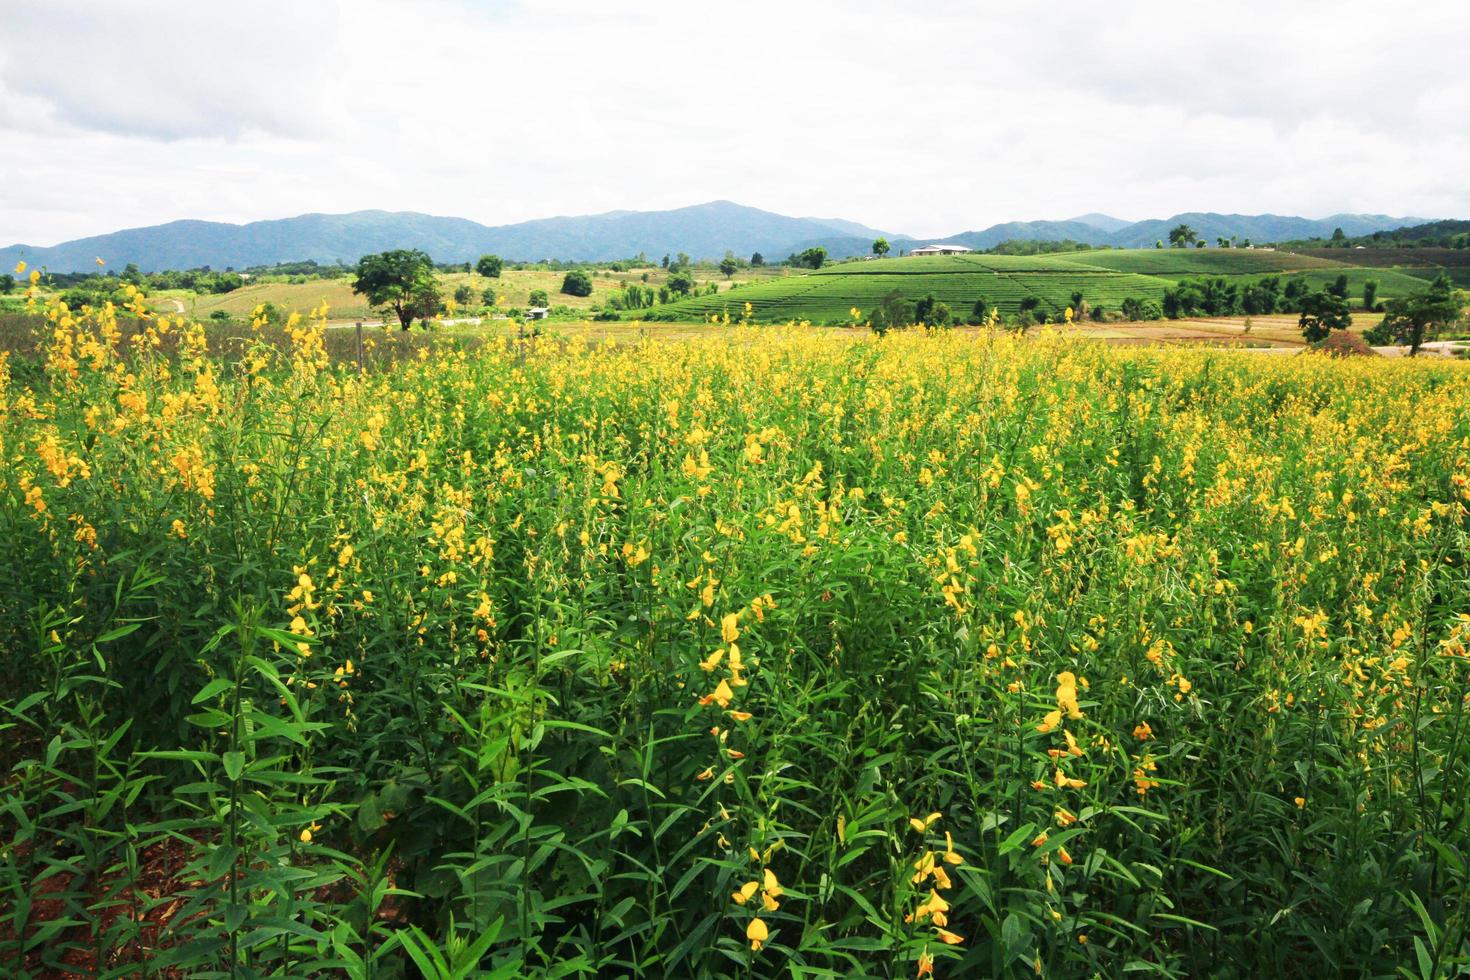 Beautiful yellow Sun hemp flowers or Crotalaria juncea farm on the mountain in Thailand.A type of legume. photo